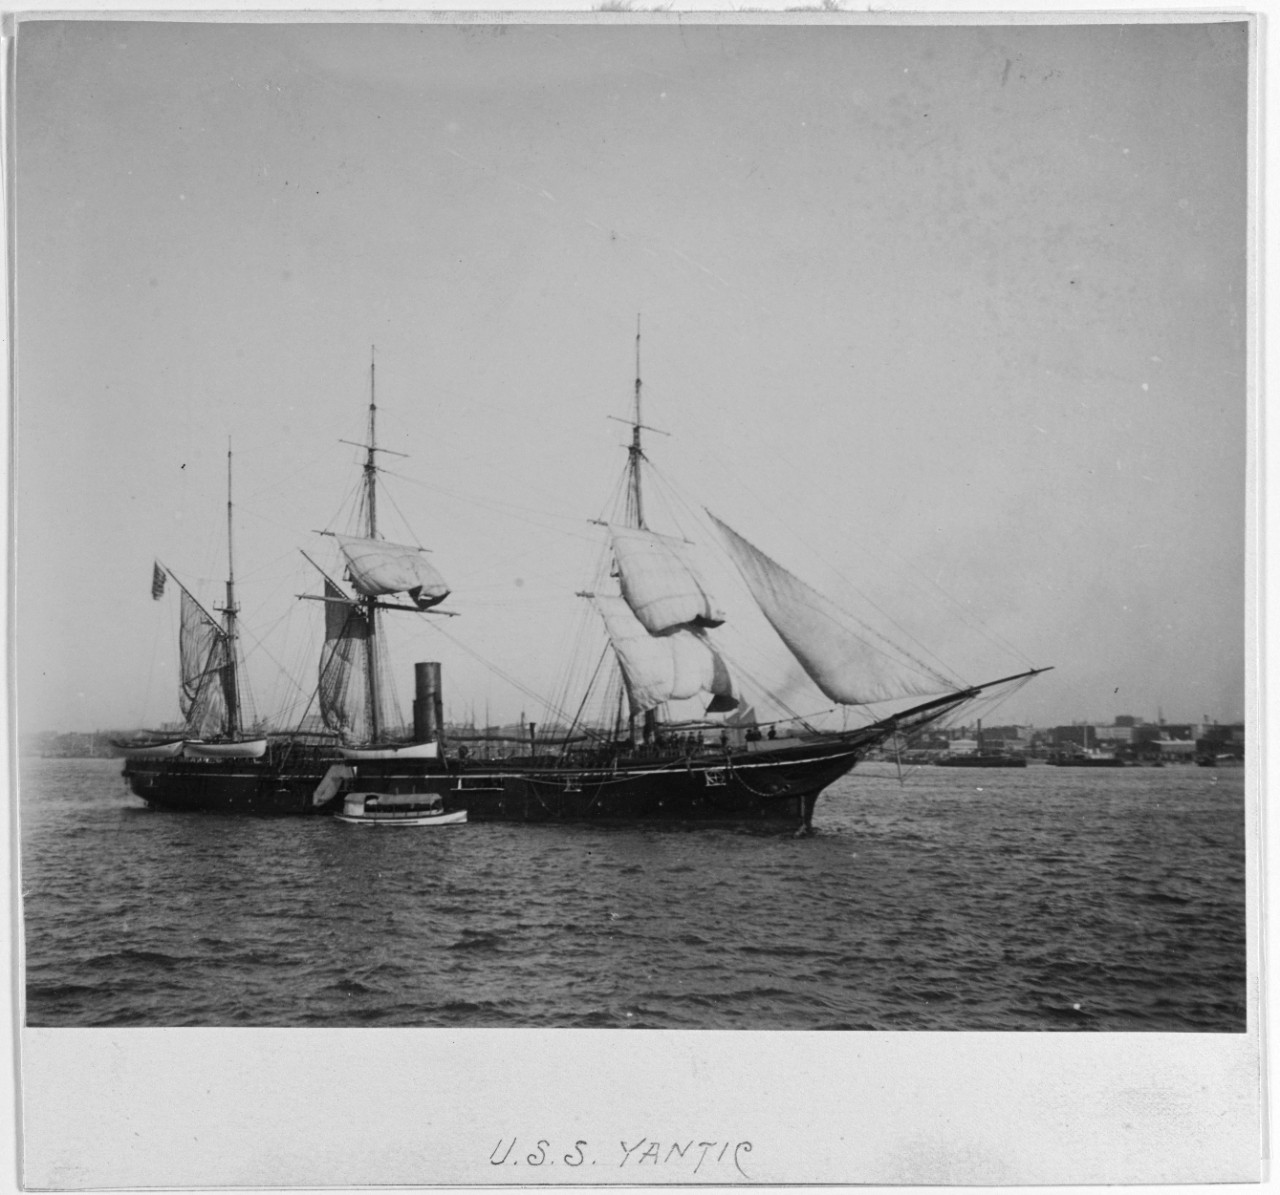 USS YANTIC (1864-1929)